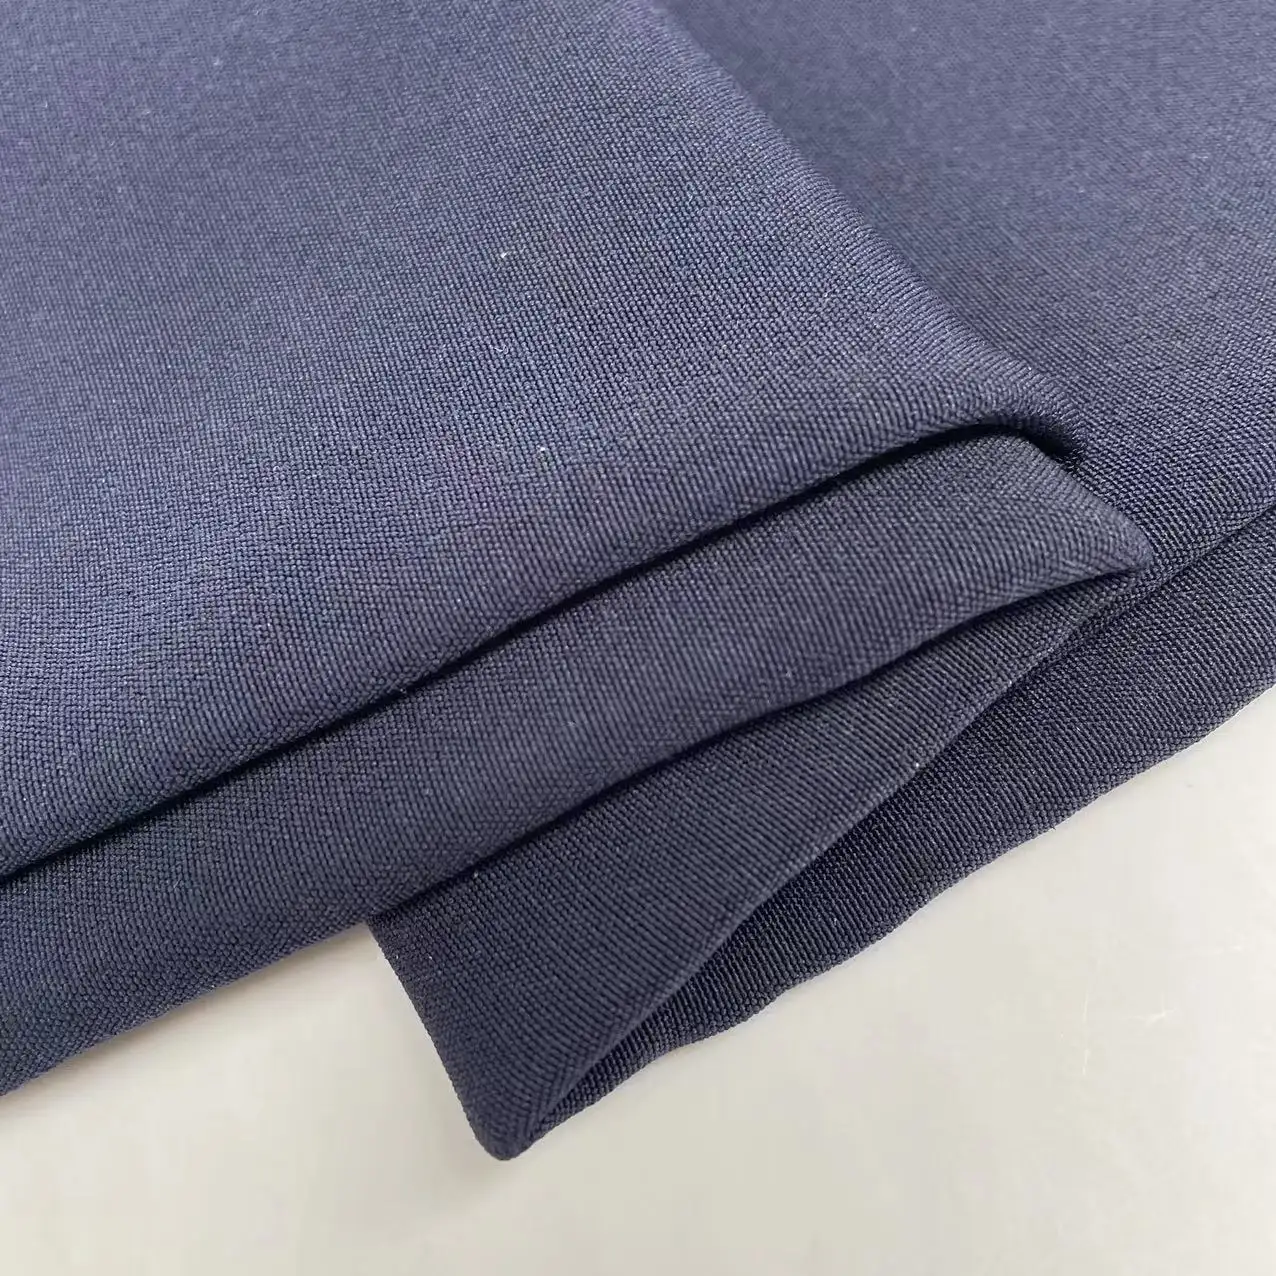 TTR bengaline fabric woven spandex warp stretch fabric for uniform pants